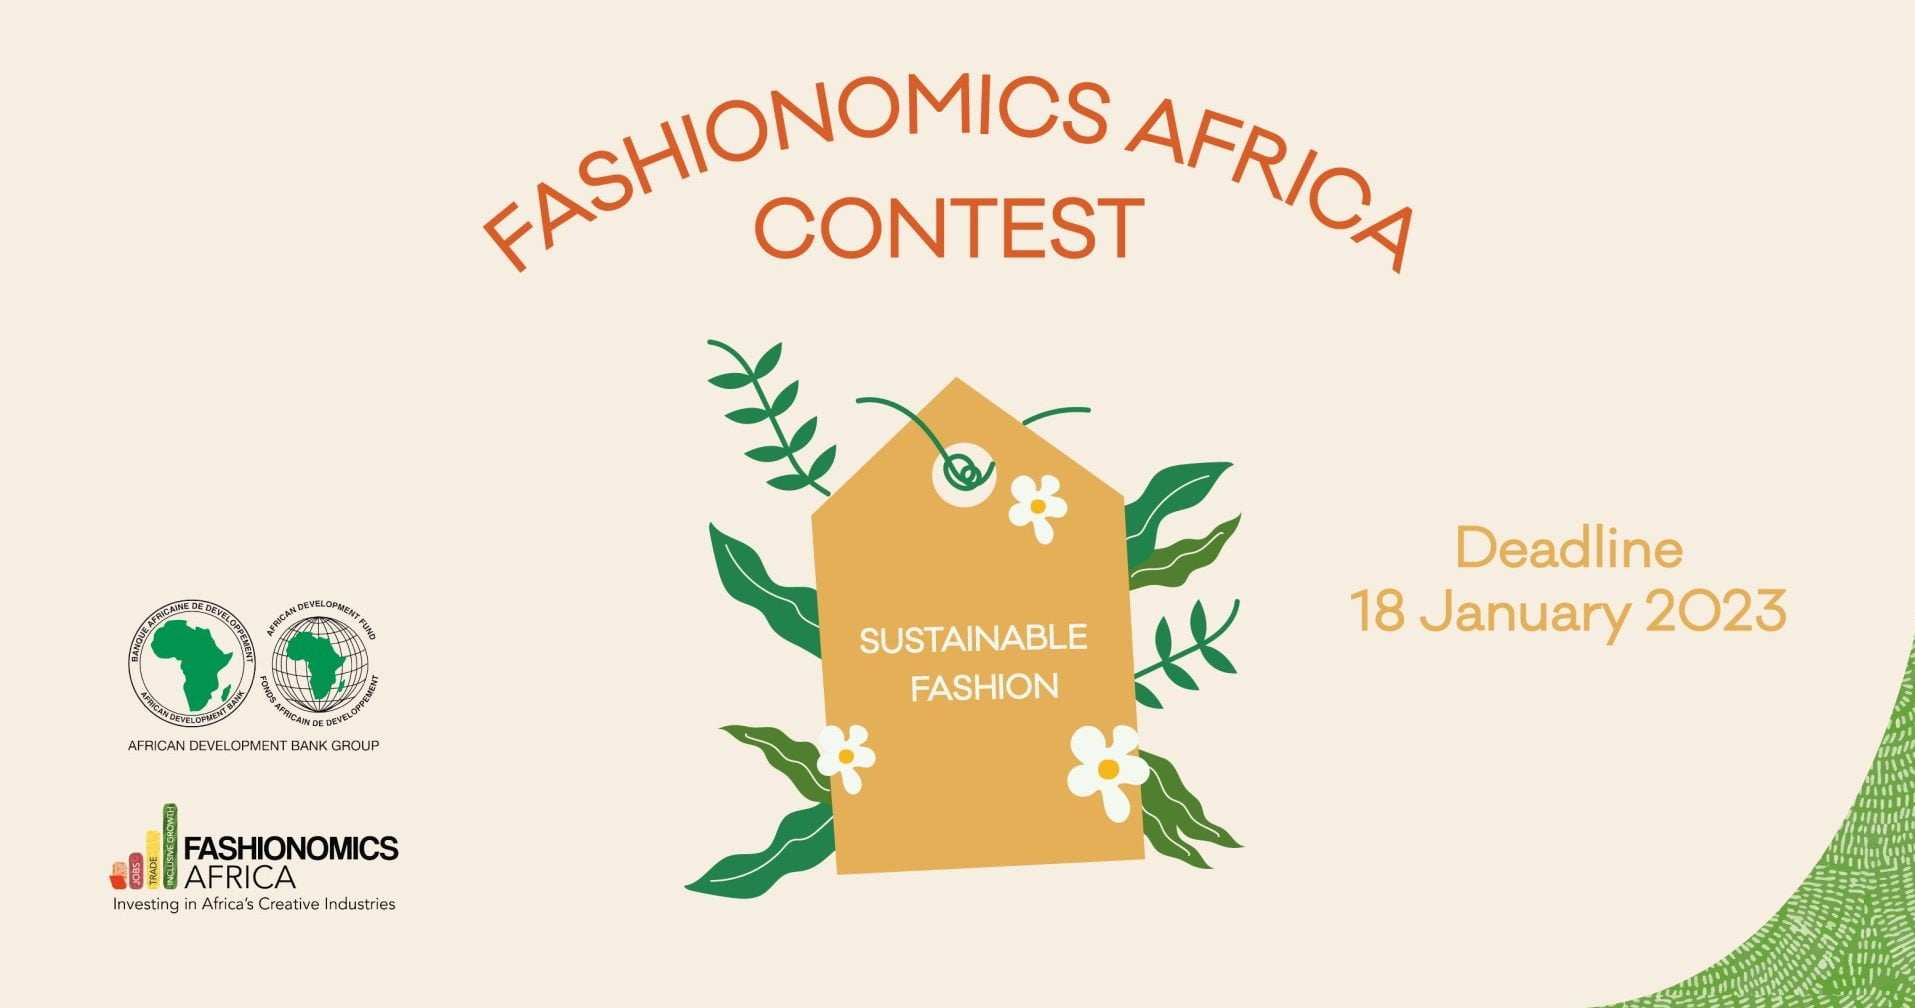 2023 African Development Bank Fashionomics Africa Contest for African fashion entrepreneurs (USD 10,000 cash Prize)